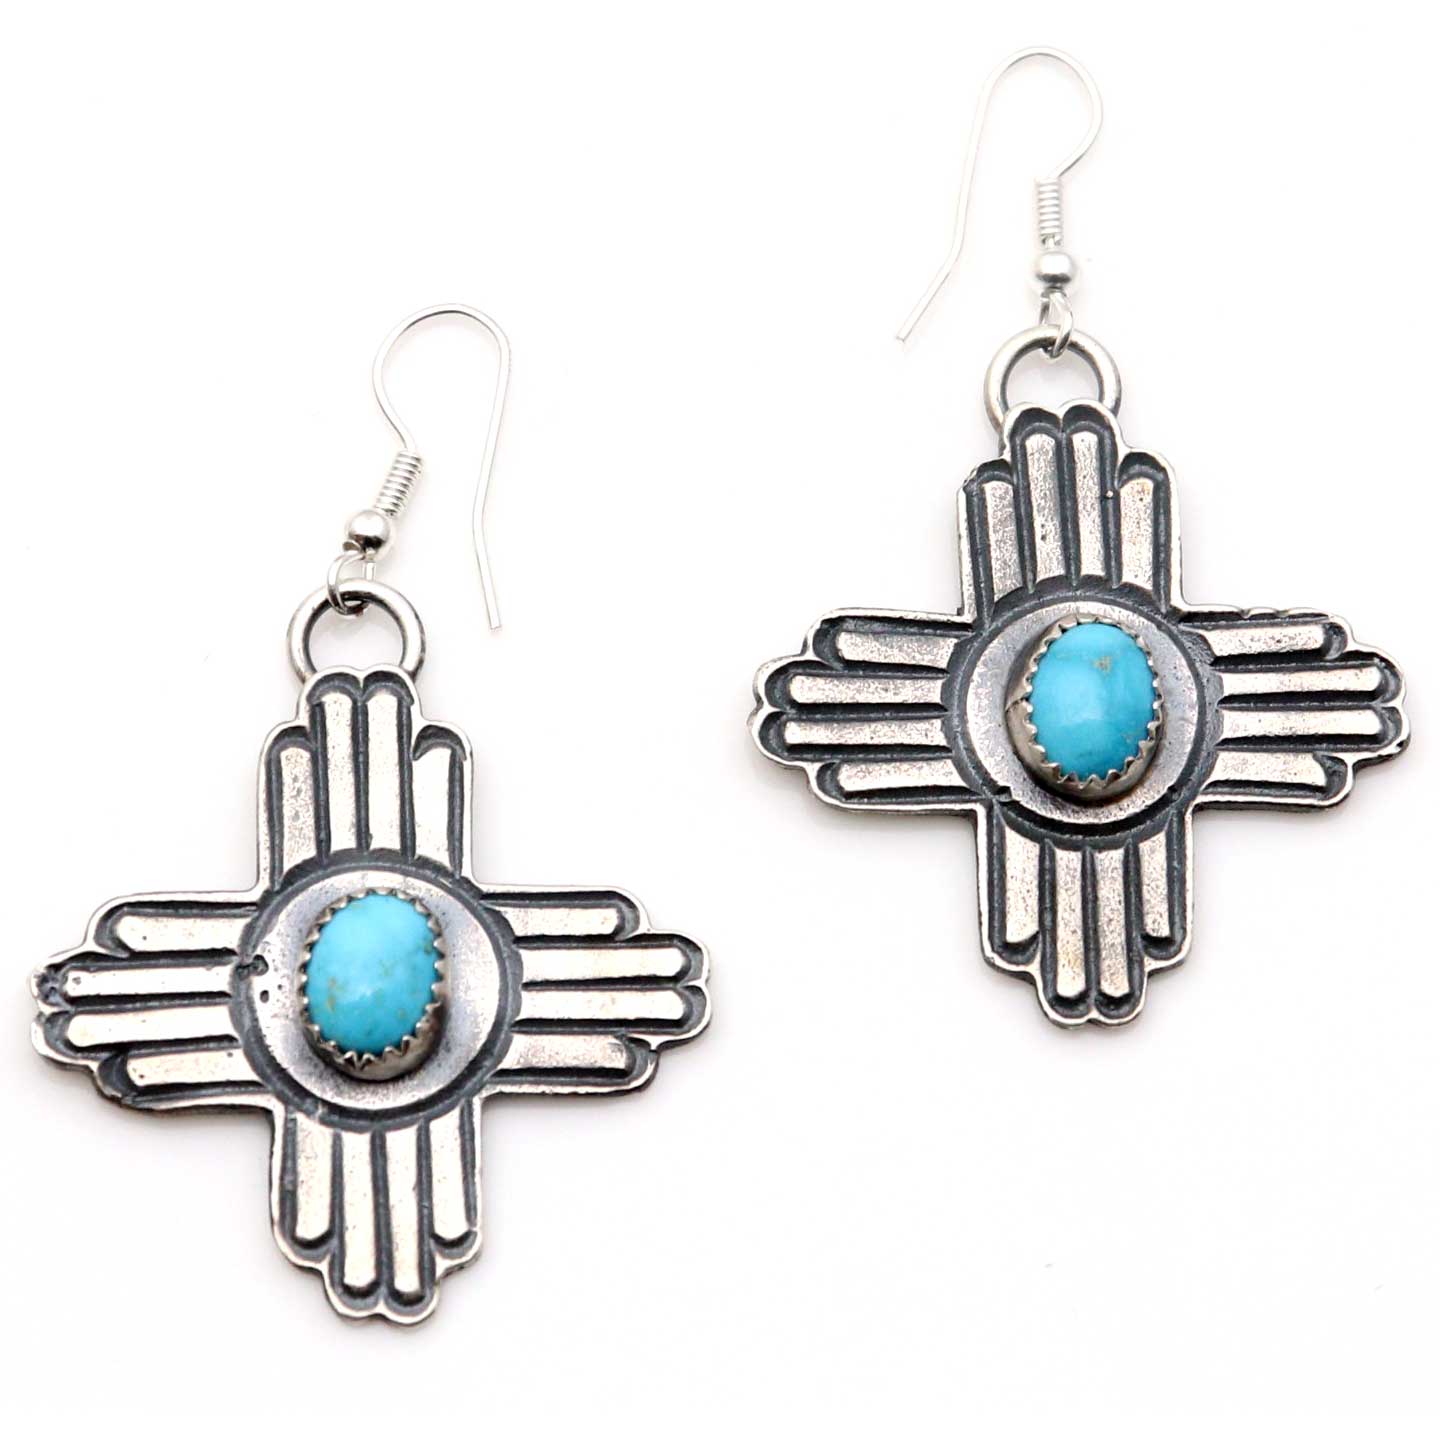 Silver Cross Earrings With Kingman Turquoise by Billah